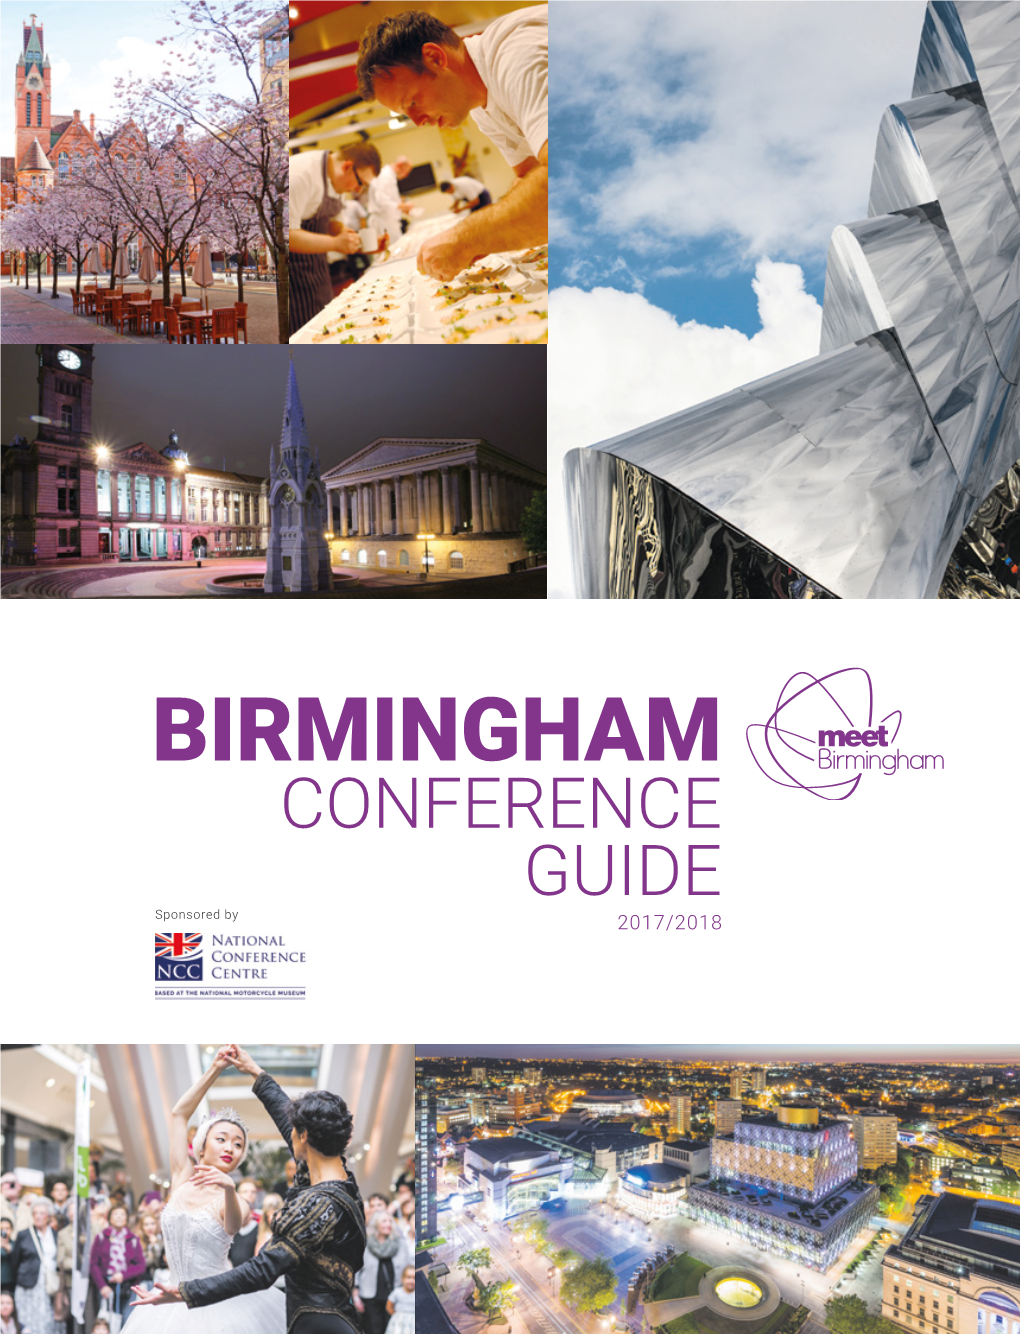 Conference Guide 2017/2018 Birmingham